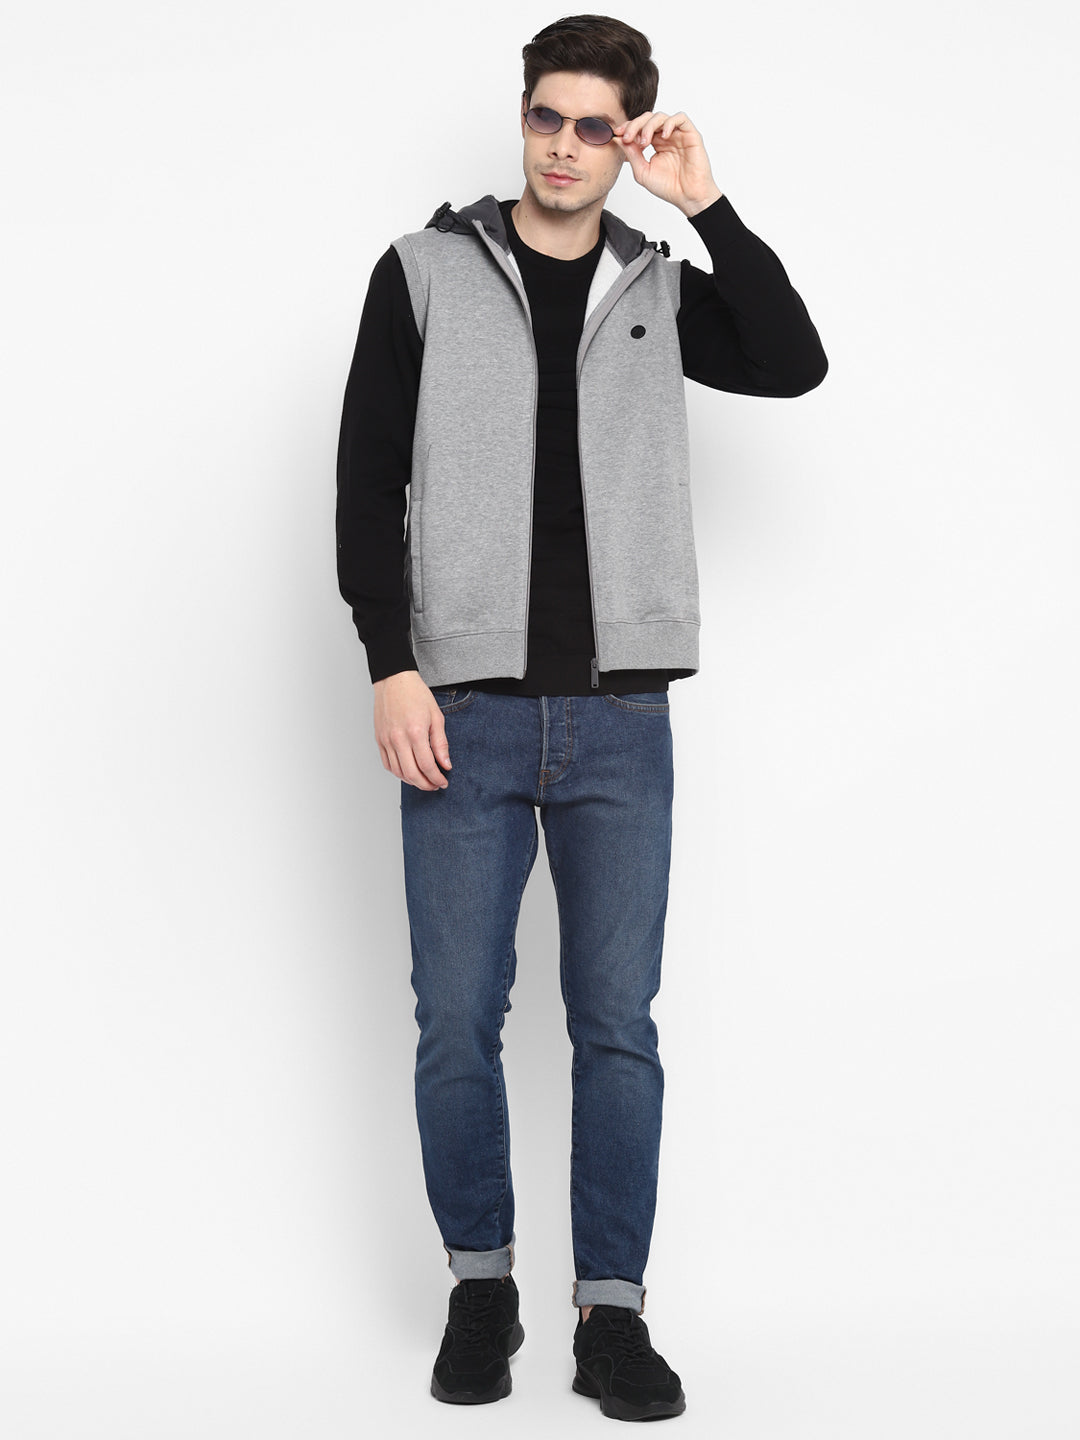 Solid Grey Sleeveless Hooded Sweatshirt for Men